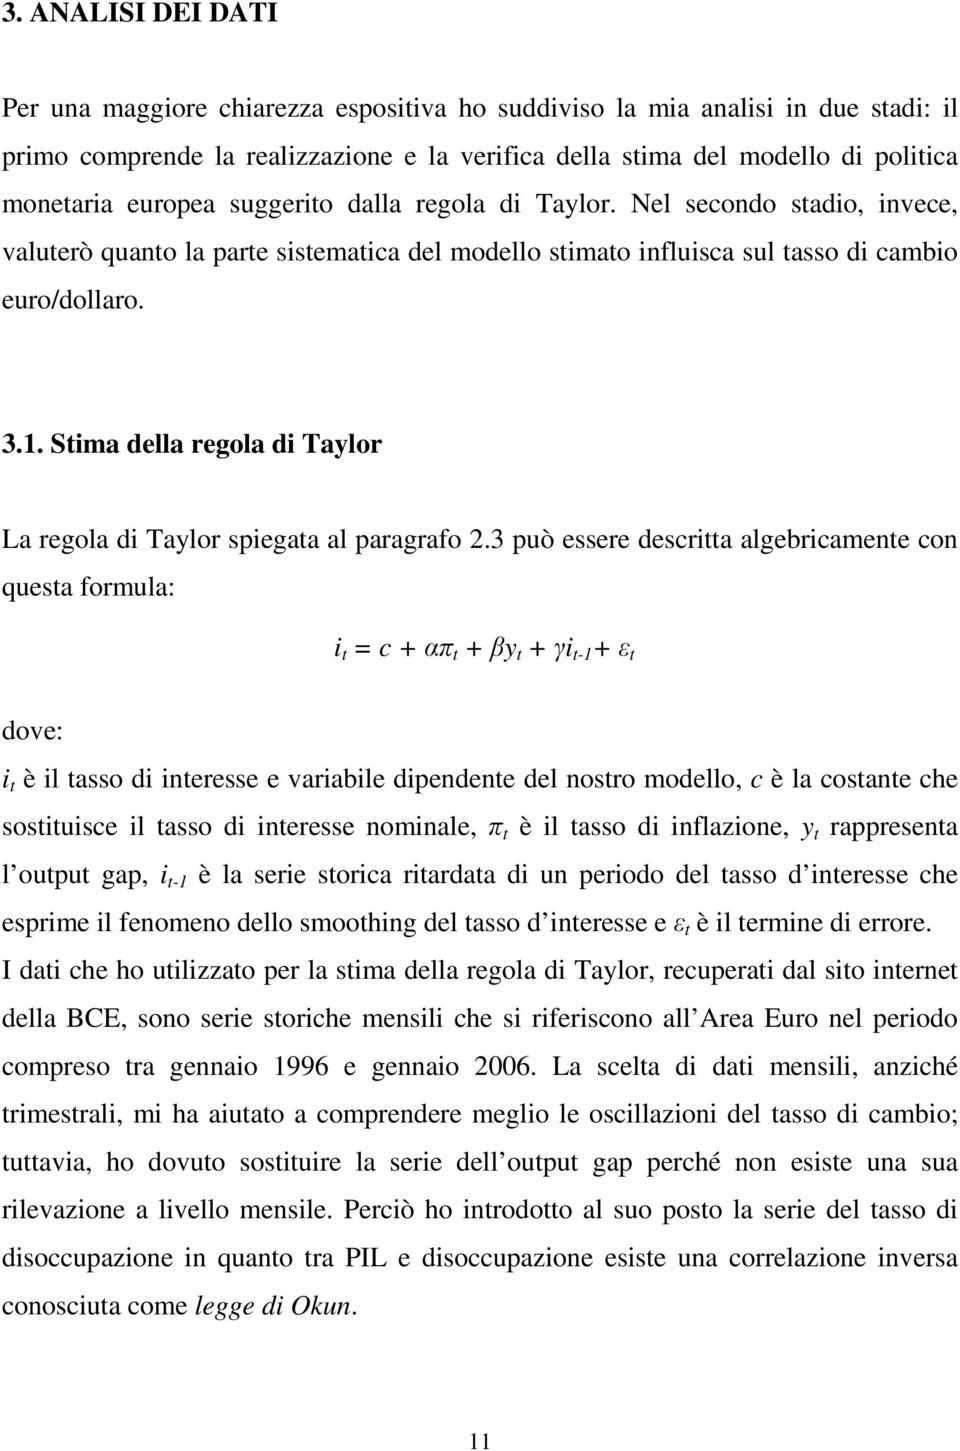 Stima della regola di Taylor La regola di Taylor spiegata al paragrafo 2.